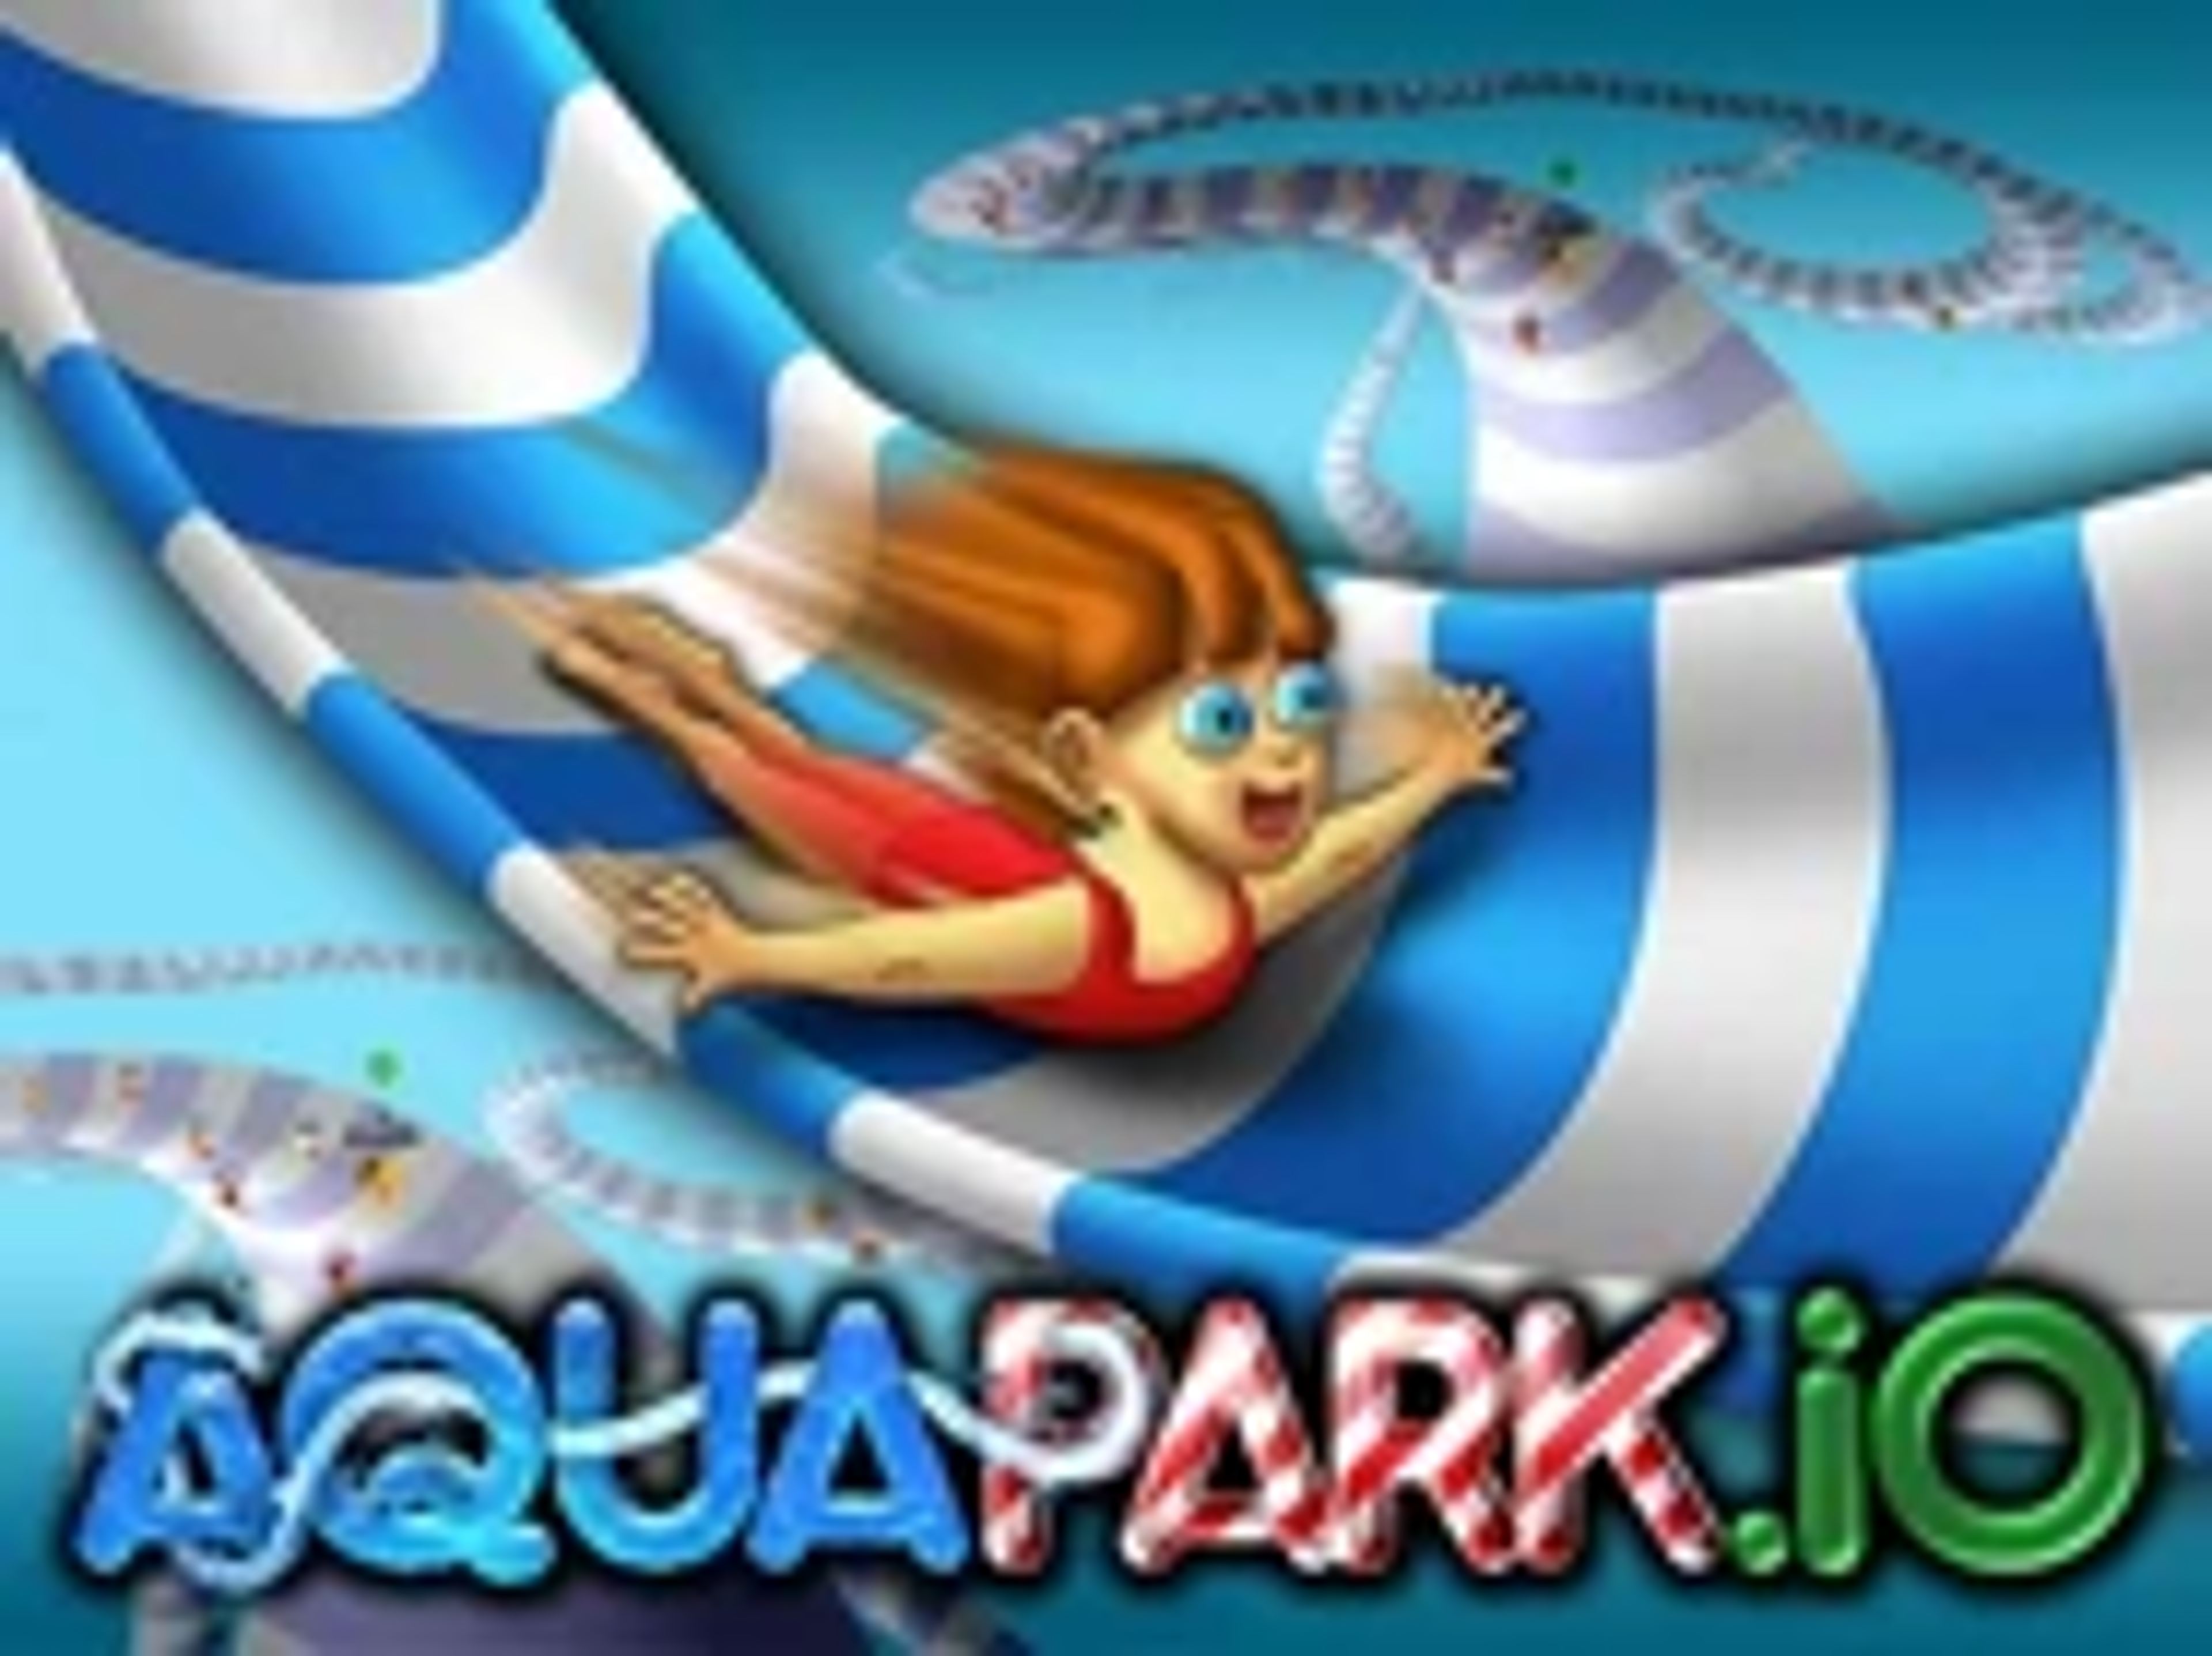 AquaPark.io